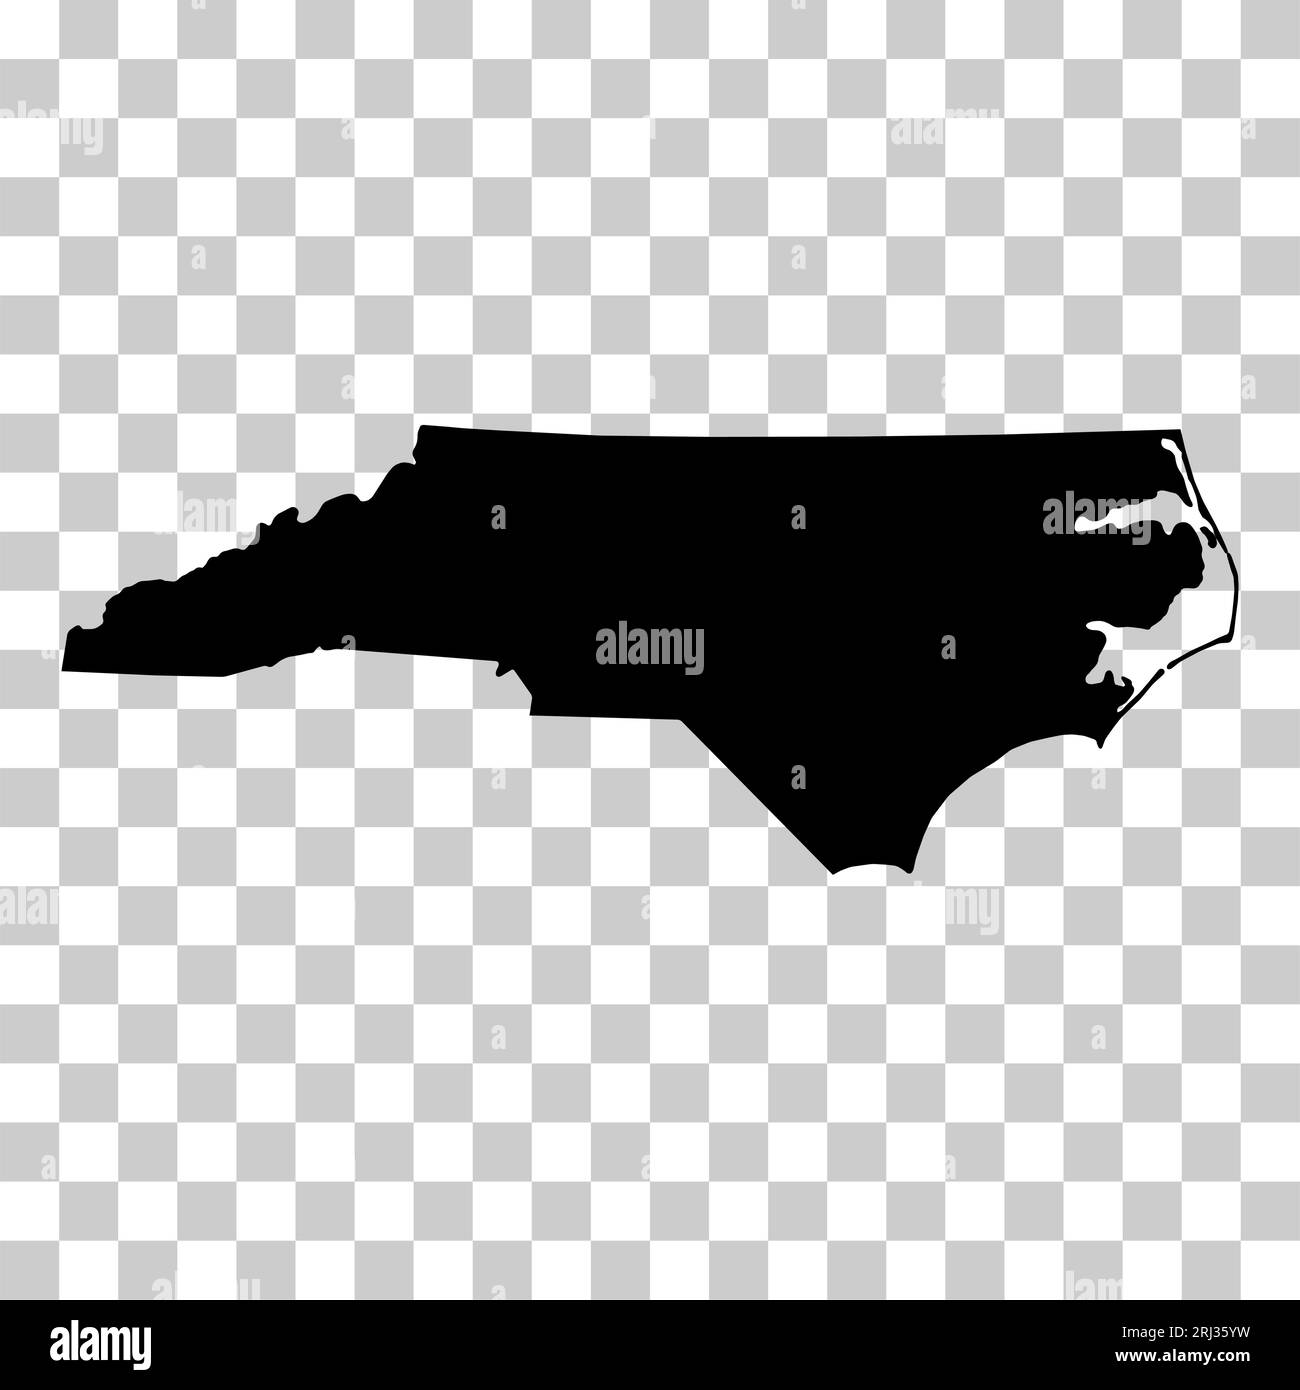 https://c8.alamy.com/comp/2RJ35YW/north-carolina-map-shape-united-states-of-america-flat-concept-symbol-vector-illustration-2RJ35YW.jpg